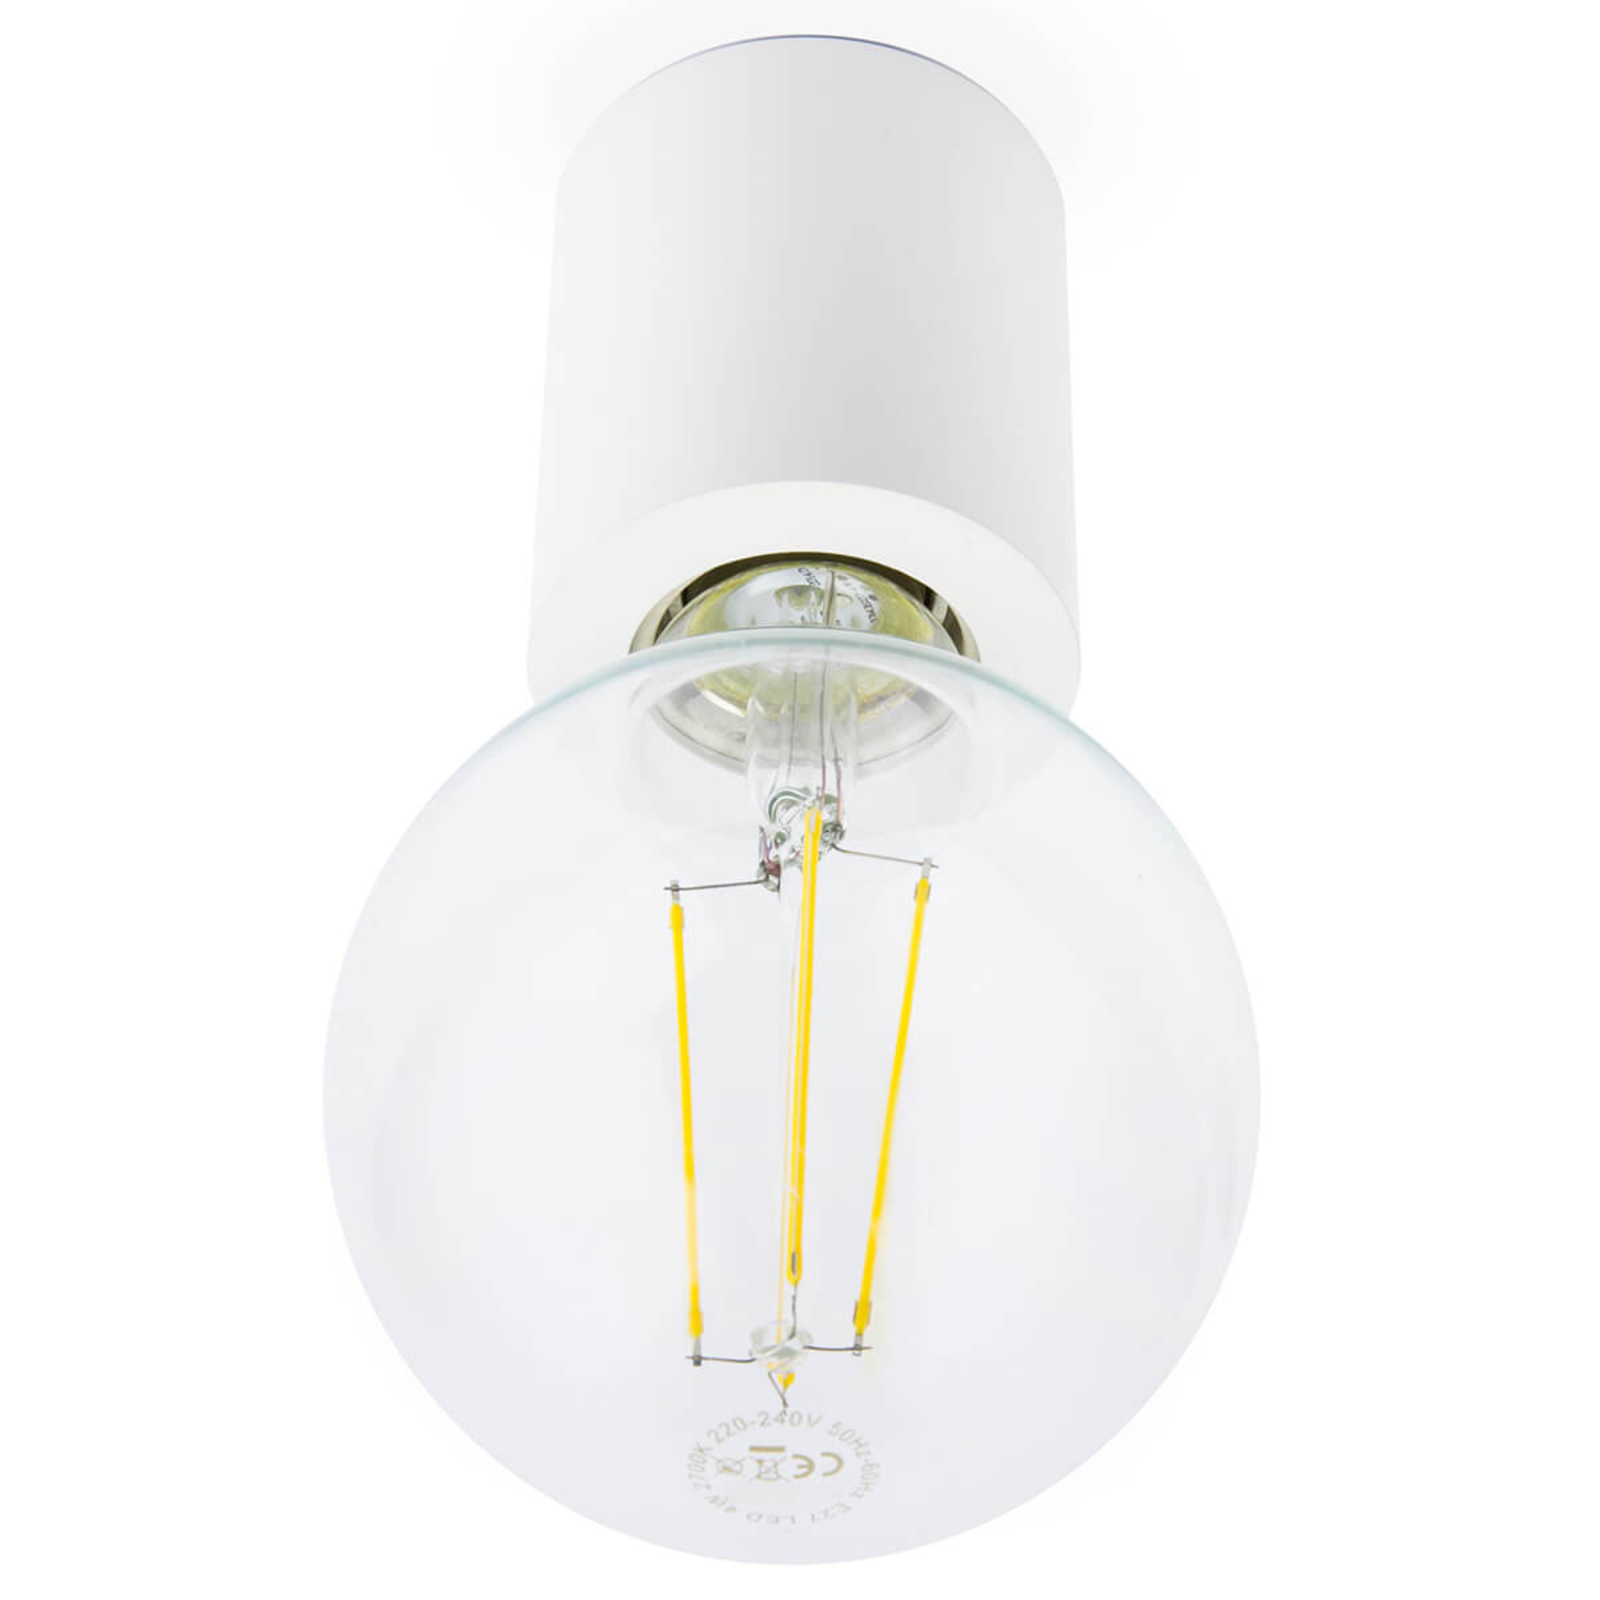 Ten - minimalistische wandlamp, wit